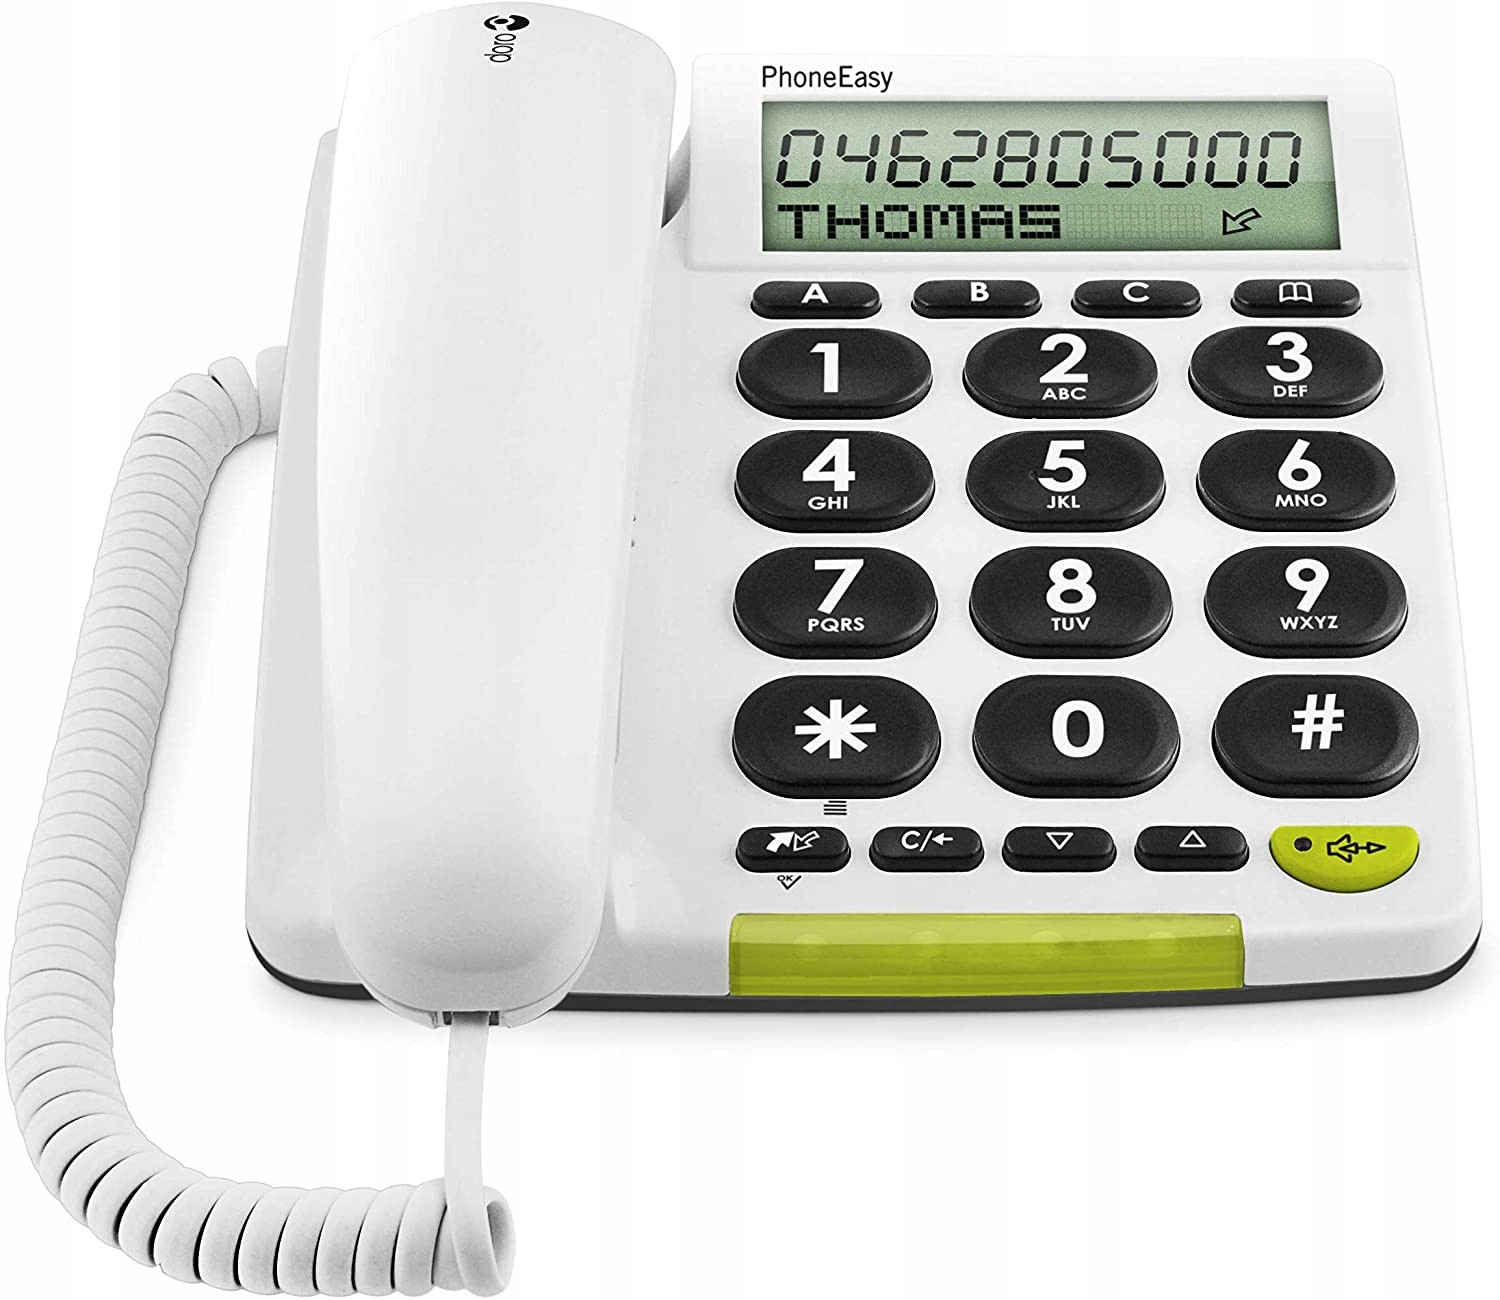 Drátový telefon Doro PhoneEasy 312cs